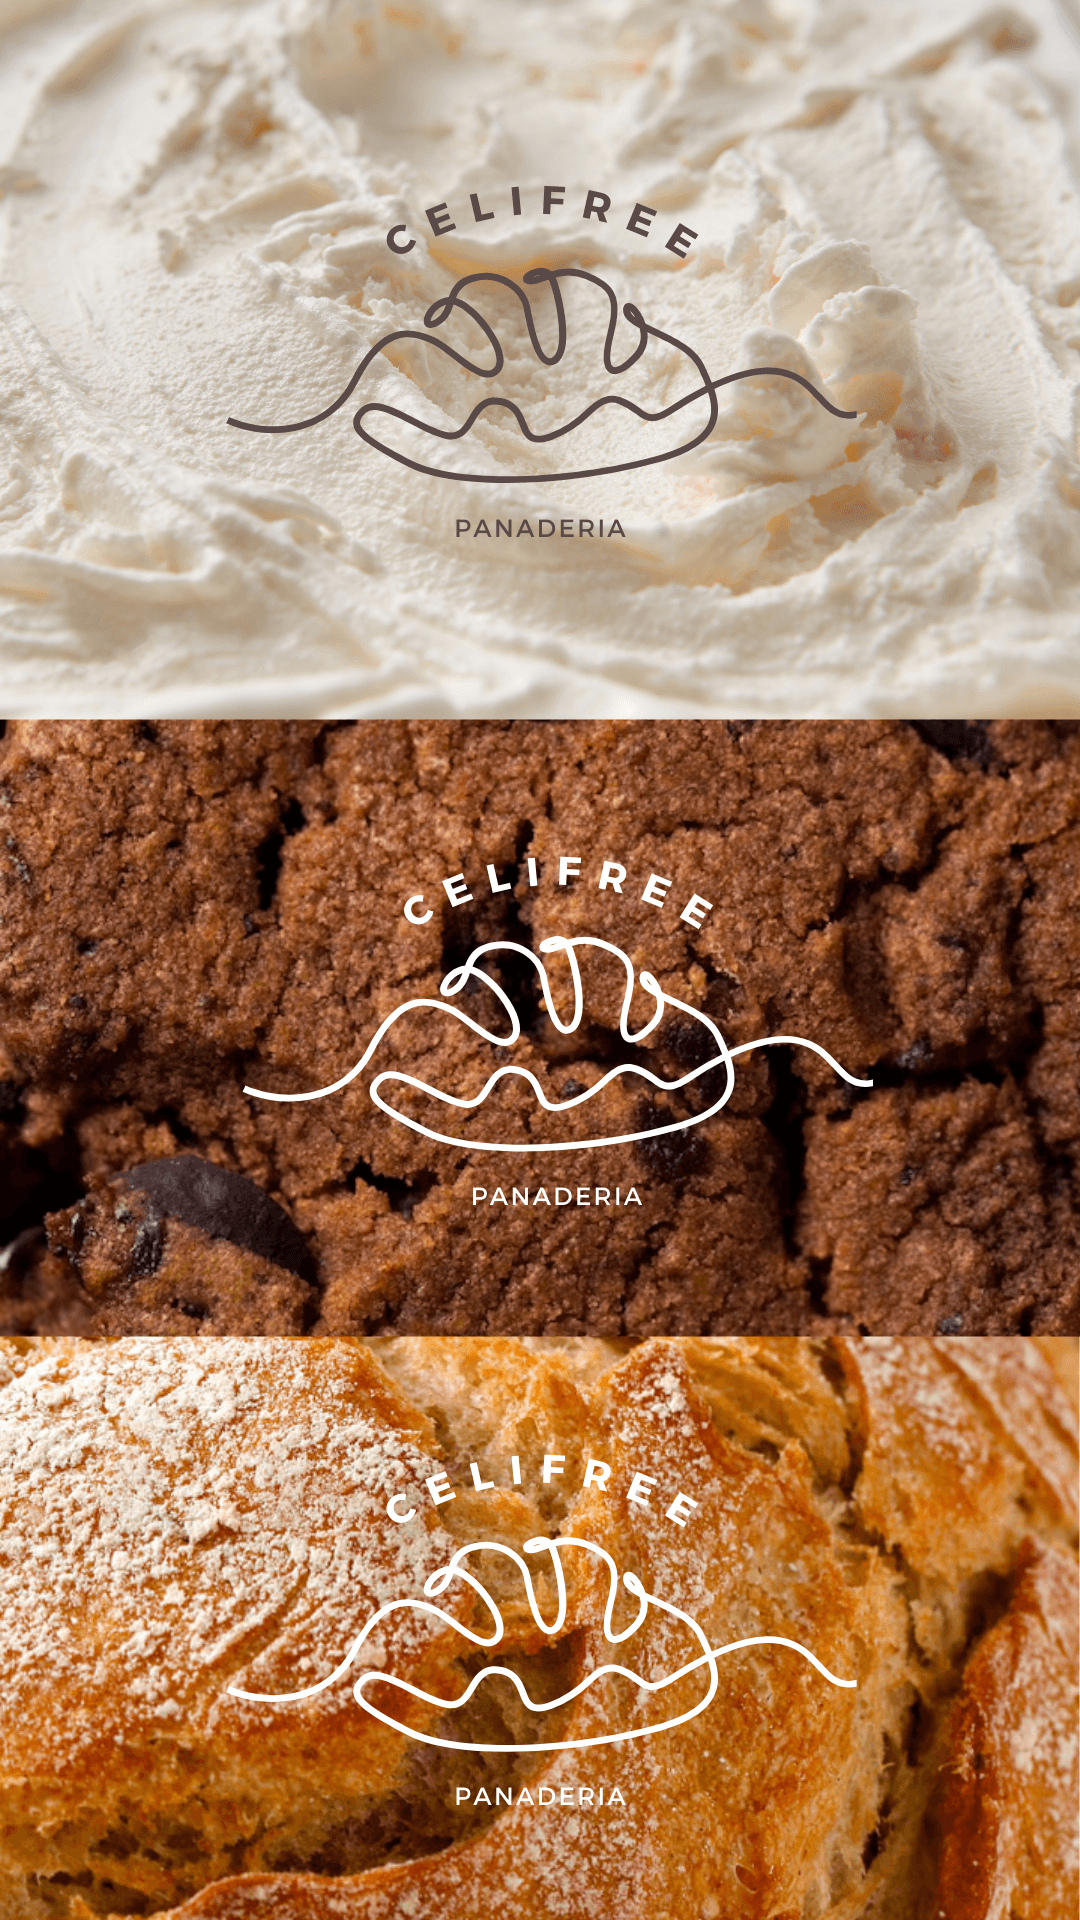 panaderia bakery gluten free Food  visual identity Brand Design identity logos Logotipo celiac